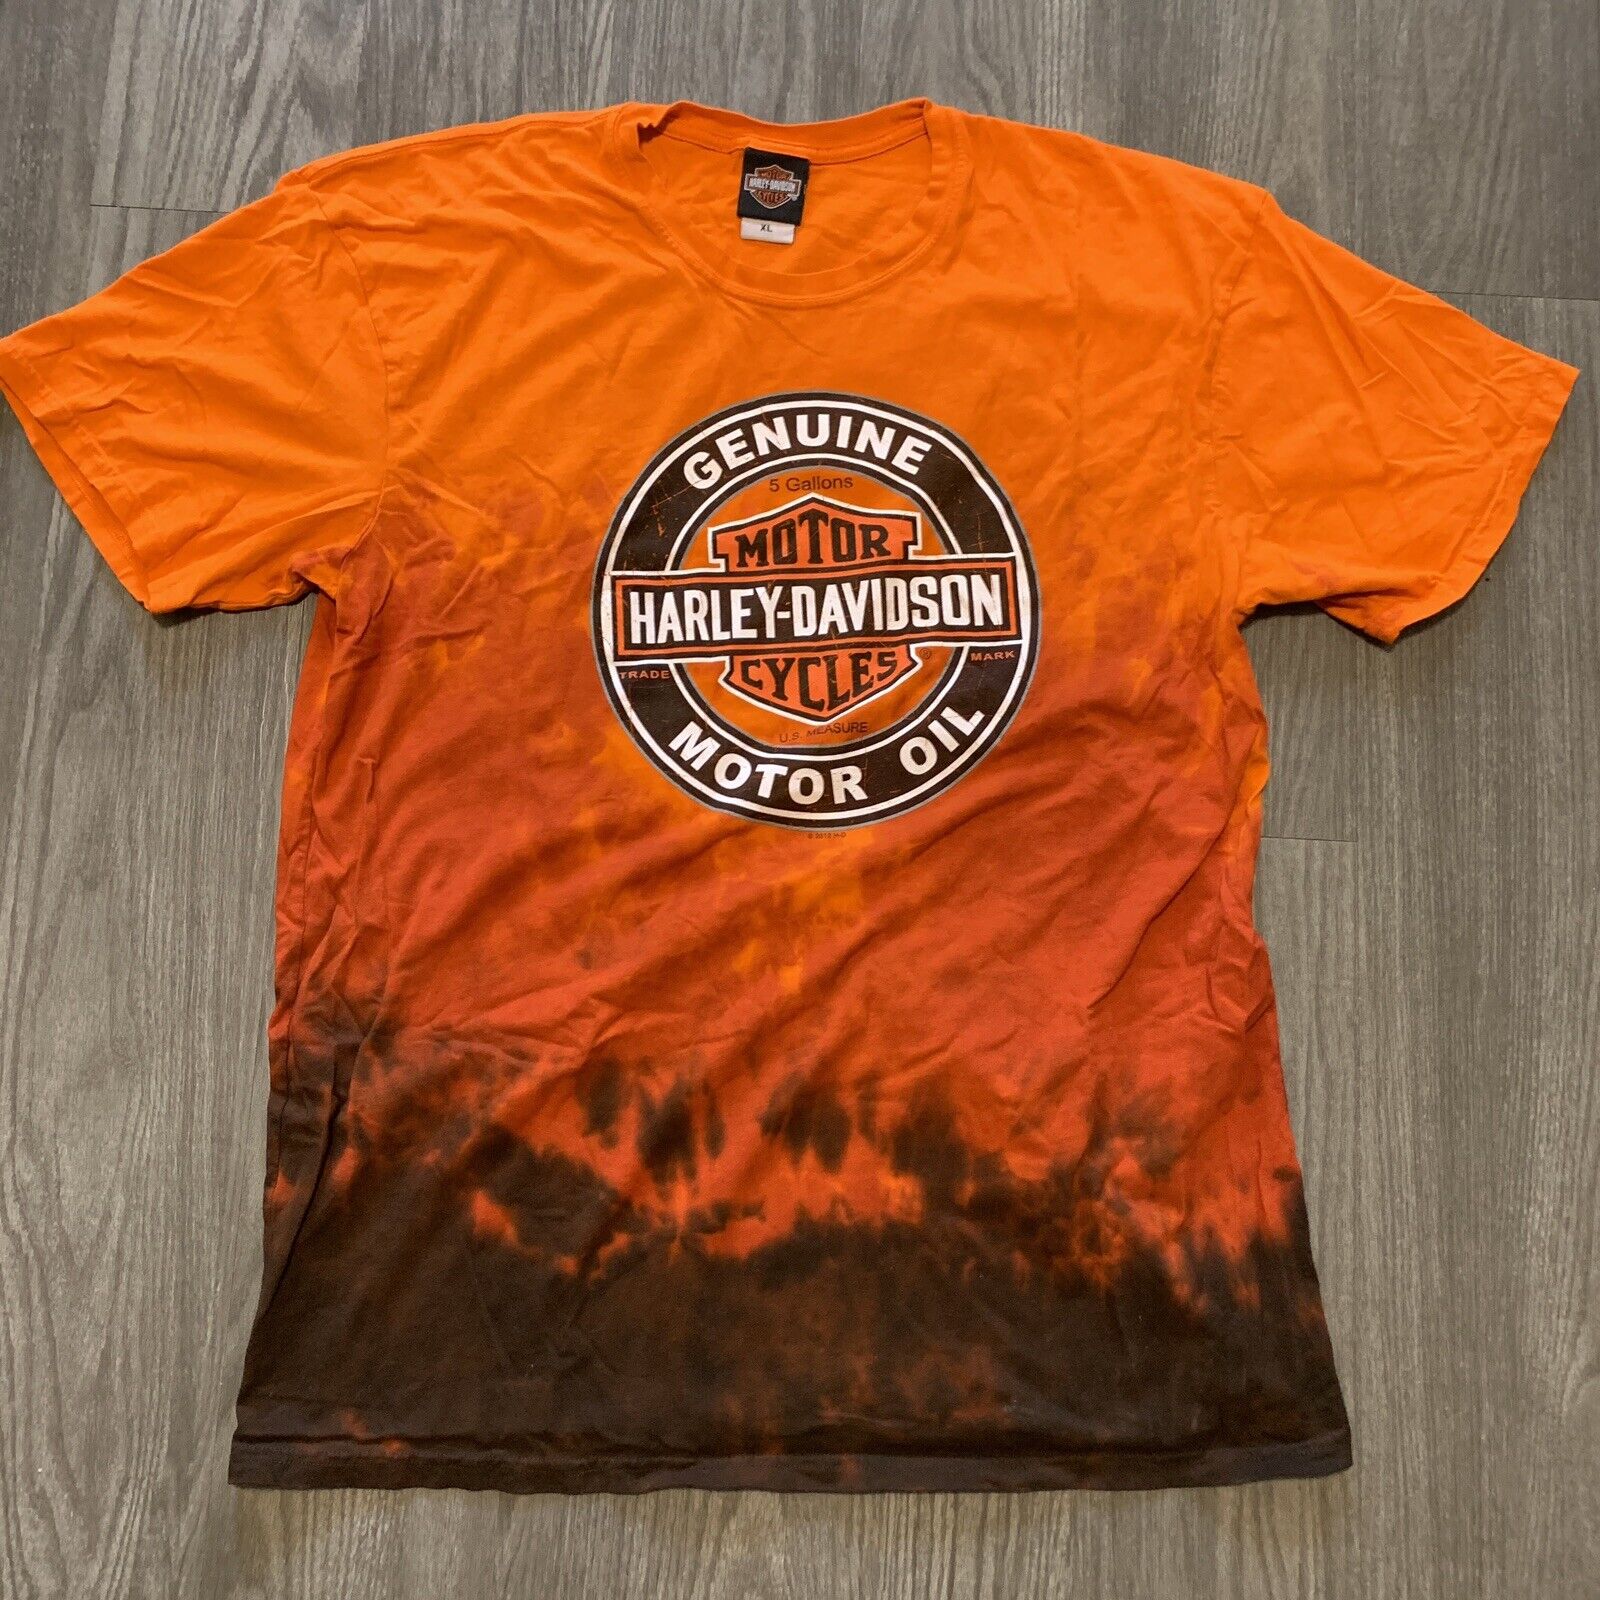 Harley Davison Mens XL Genuine Motor Oil Orange Short Sleeve T Shirt 2012 Ohio